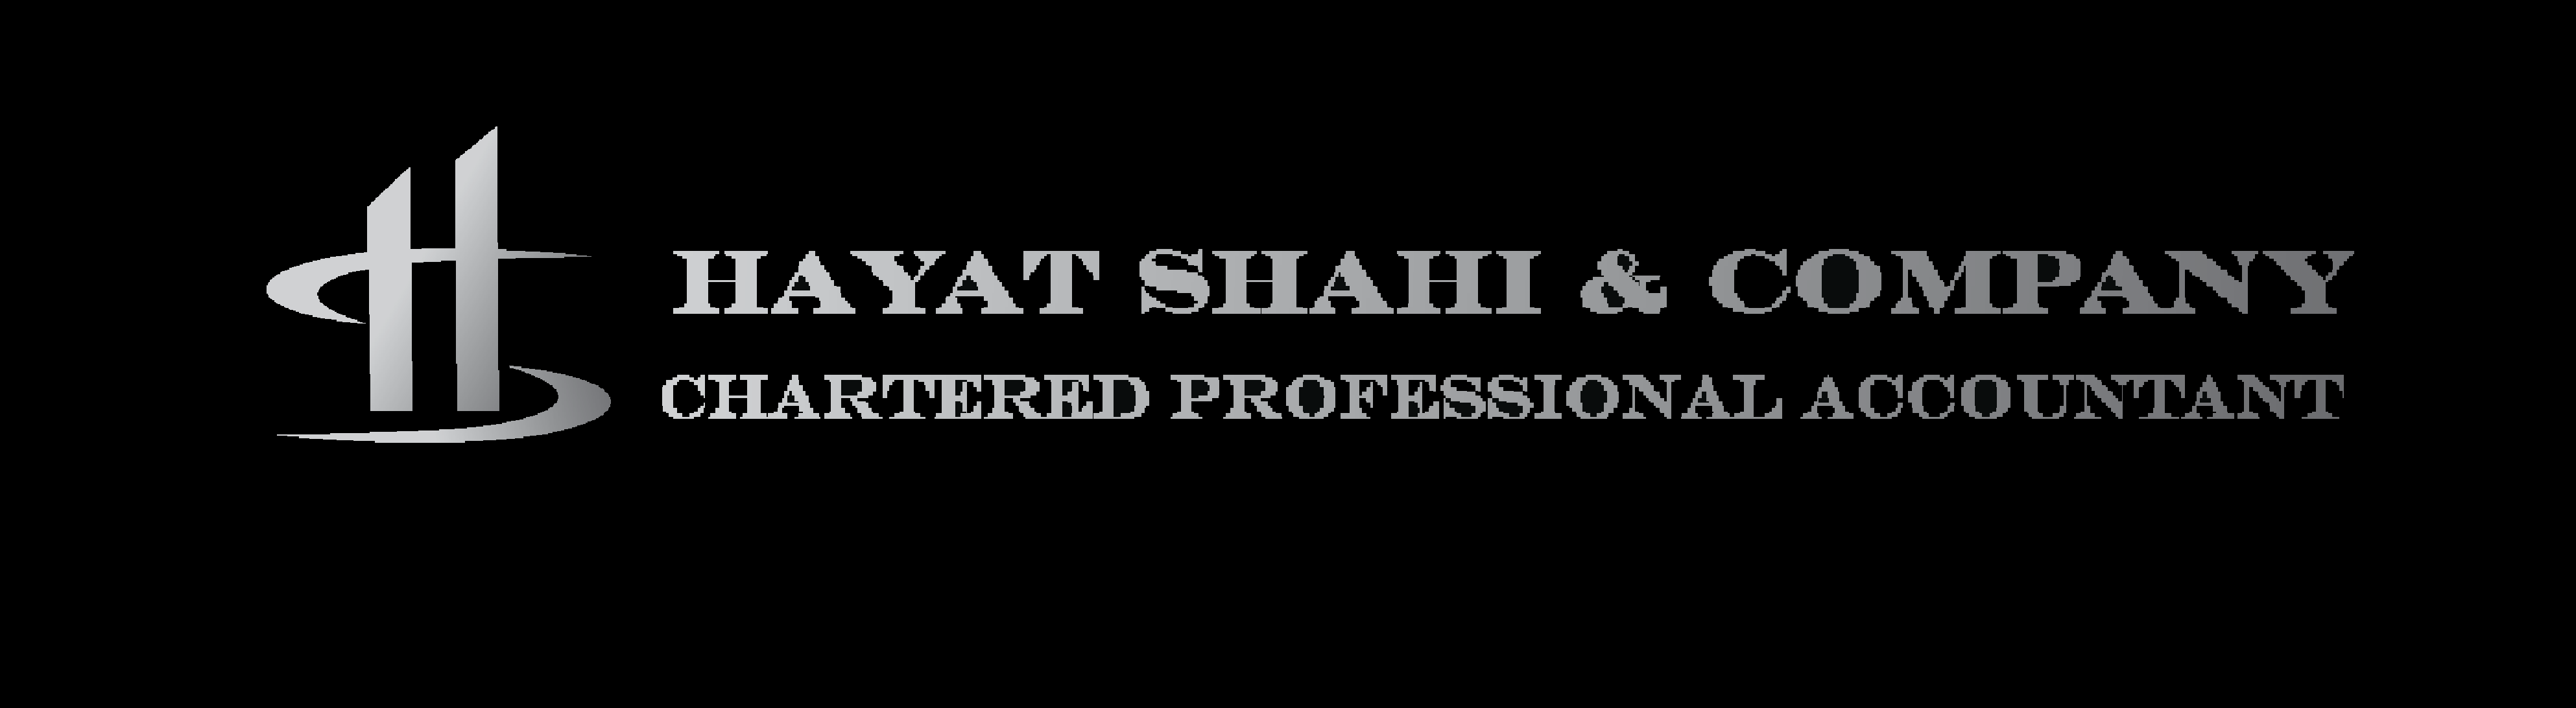 Hayat Shahi & Company Accounting